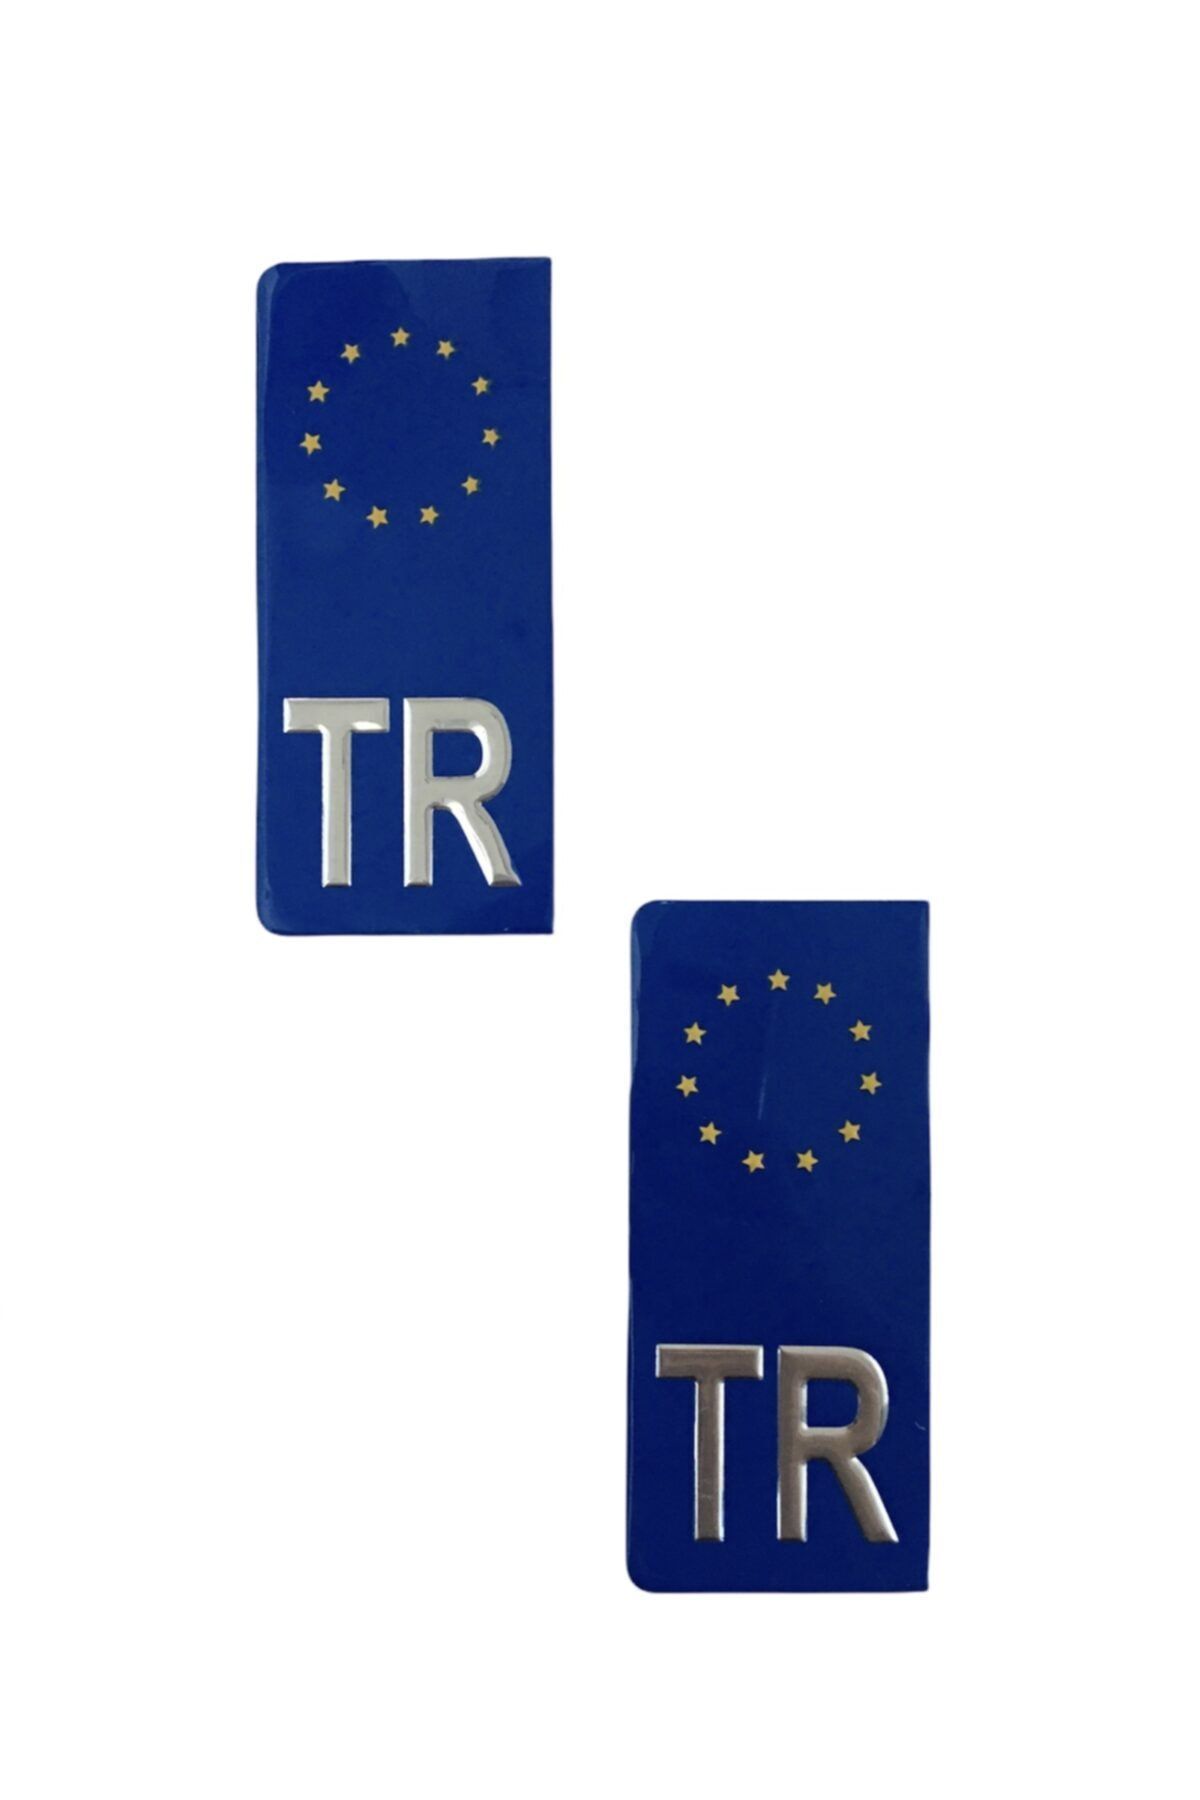 DMR Tr Plaka Metal Sticker 2 Adet (türkiye Avrupa Birliği Plaka Sticker)